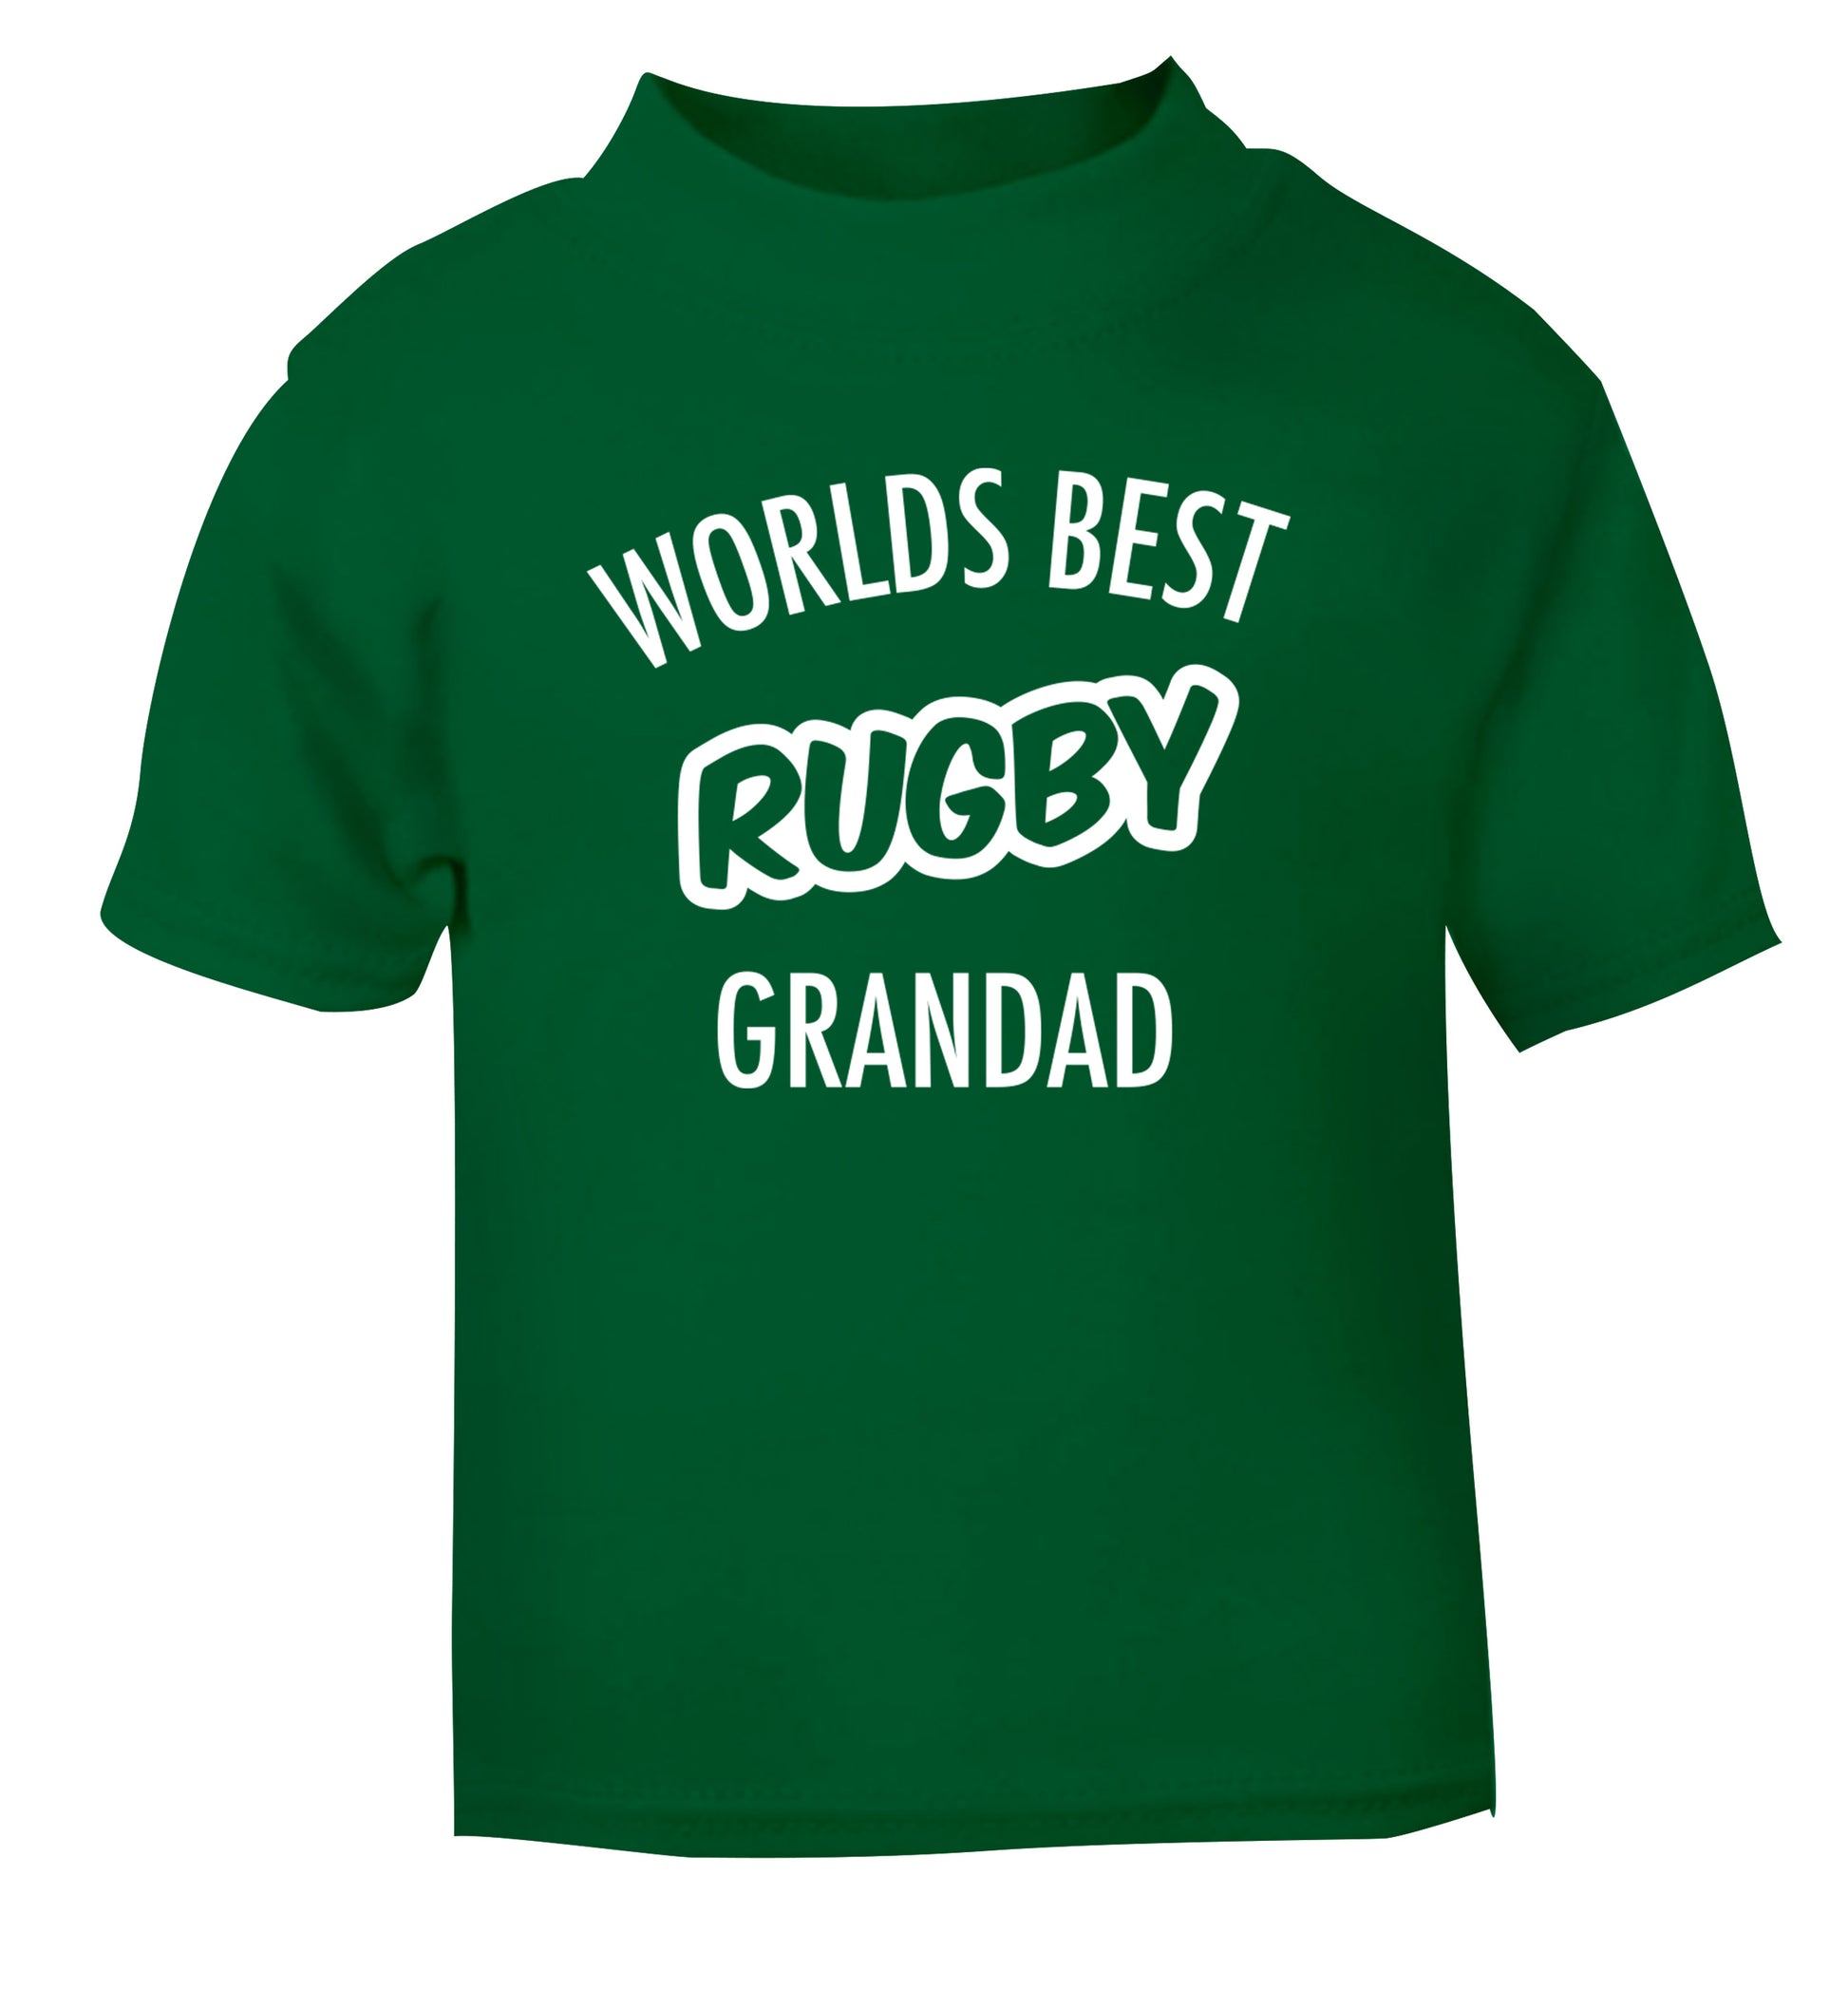 Worlds best rugby grandad green Baby Toddler Tshirt 2 Years